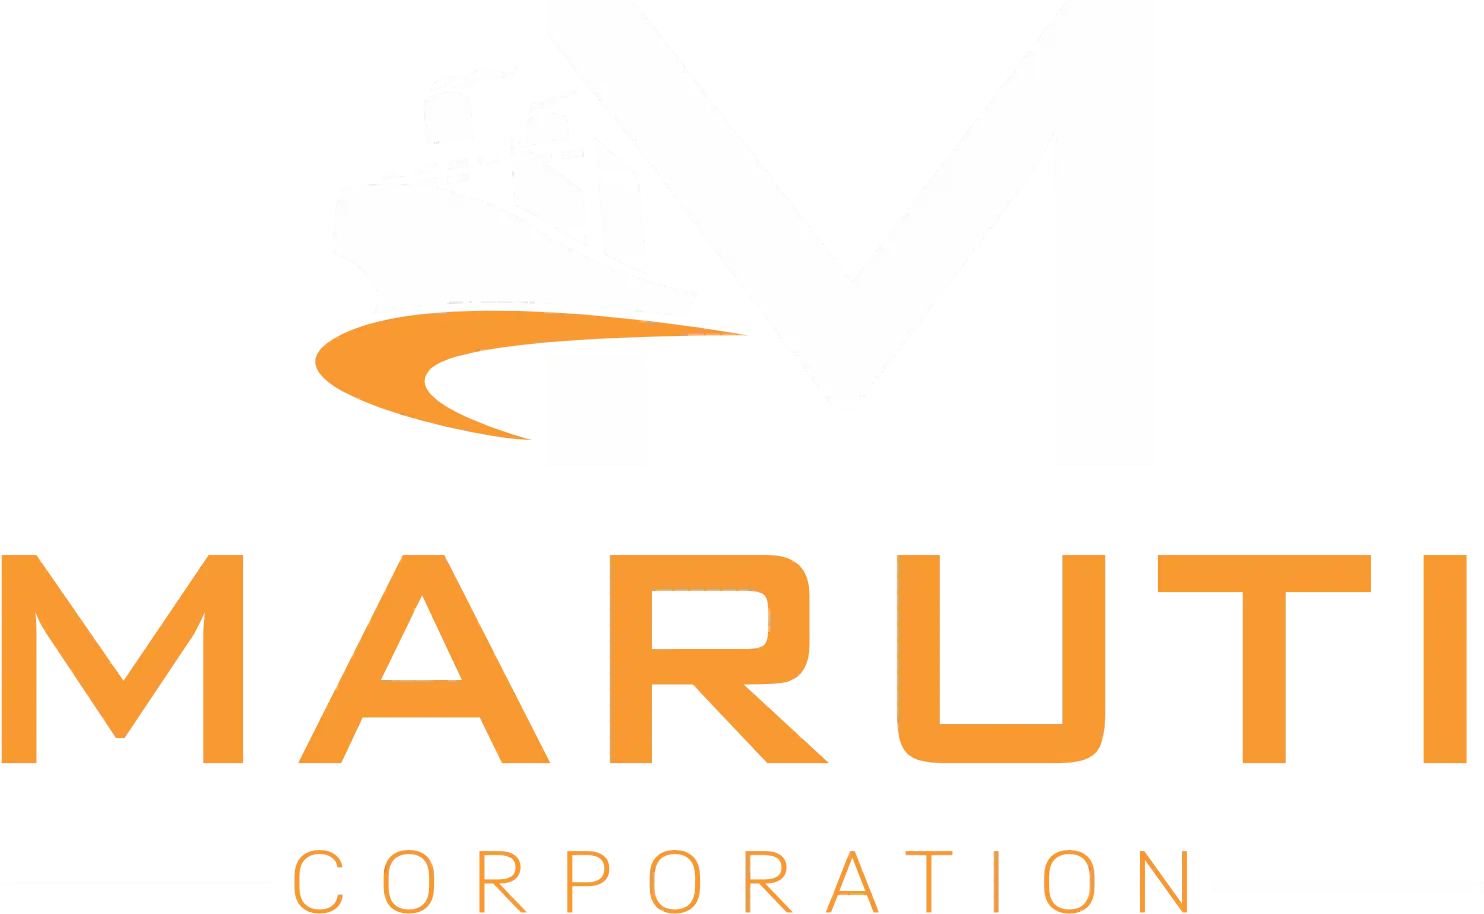 Maruti Corporation